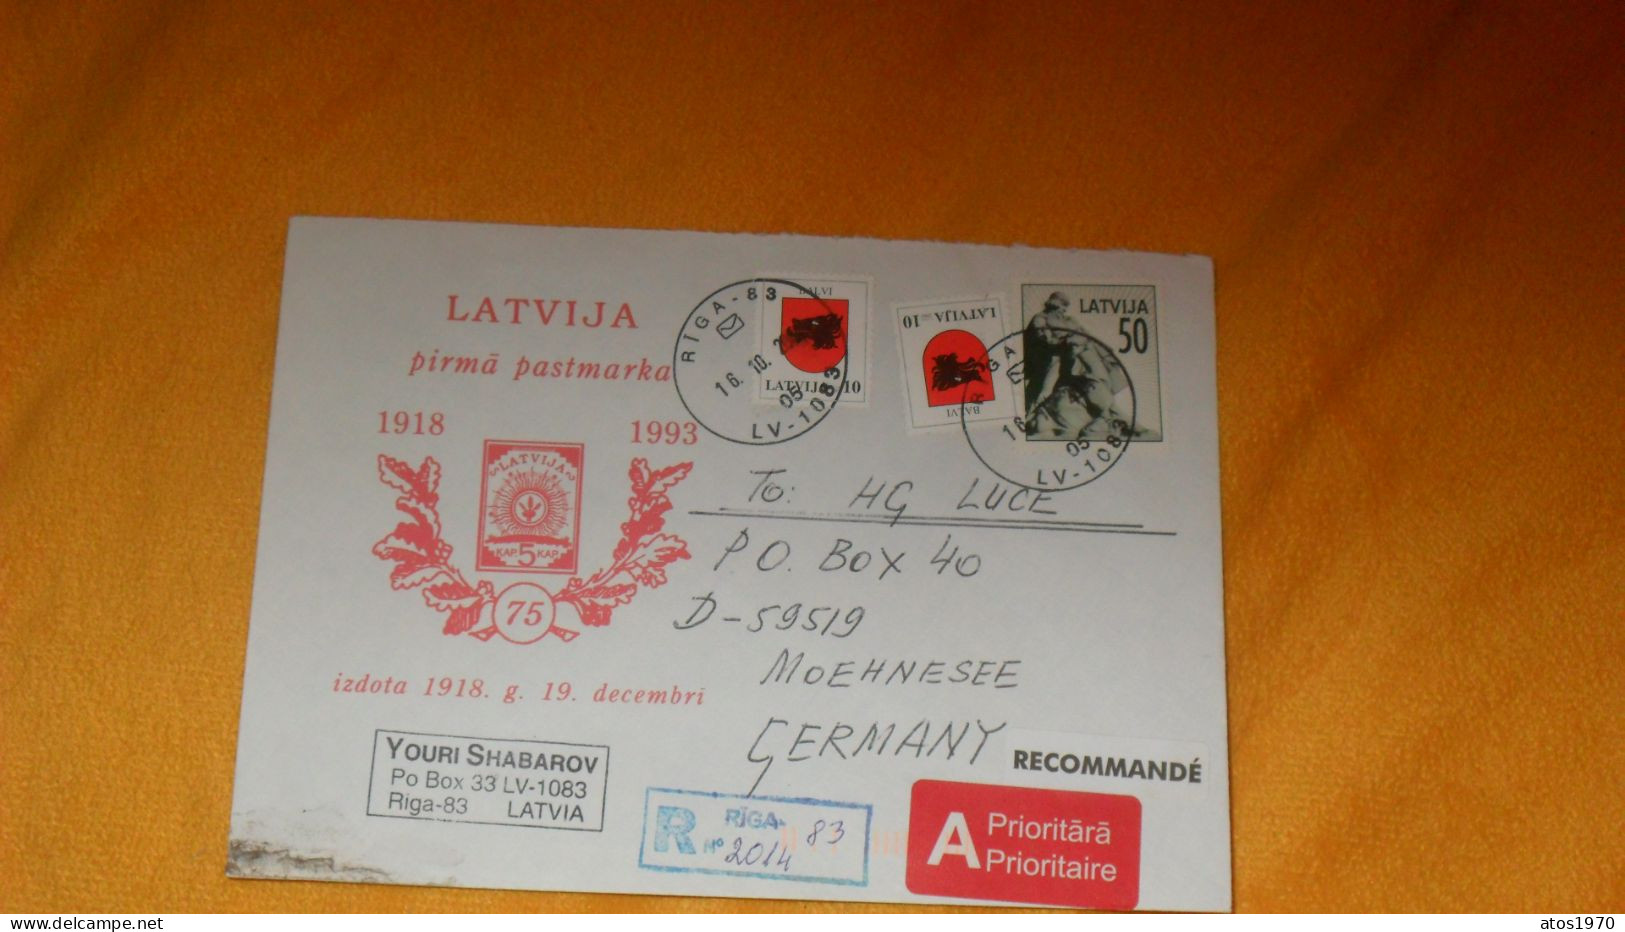 ENVELOPPE DATE ?../ LATVIJA PIRMA PASTMARKA 1918 - 1993../ RECOMMANDE + CACHETS RIGA 83 + TIMBRES X3 - Lettland